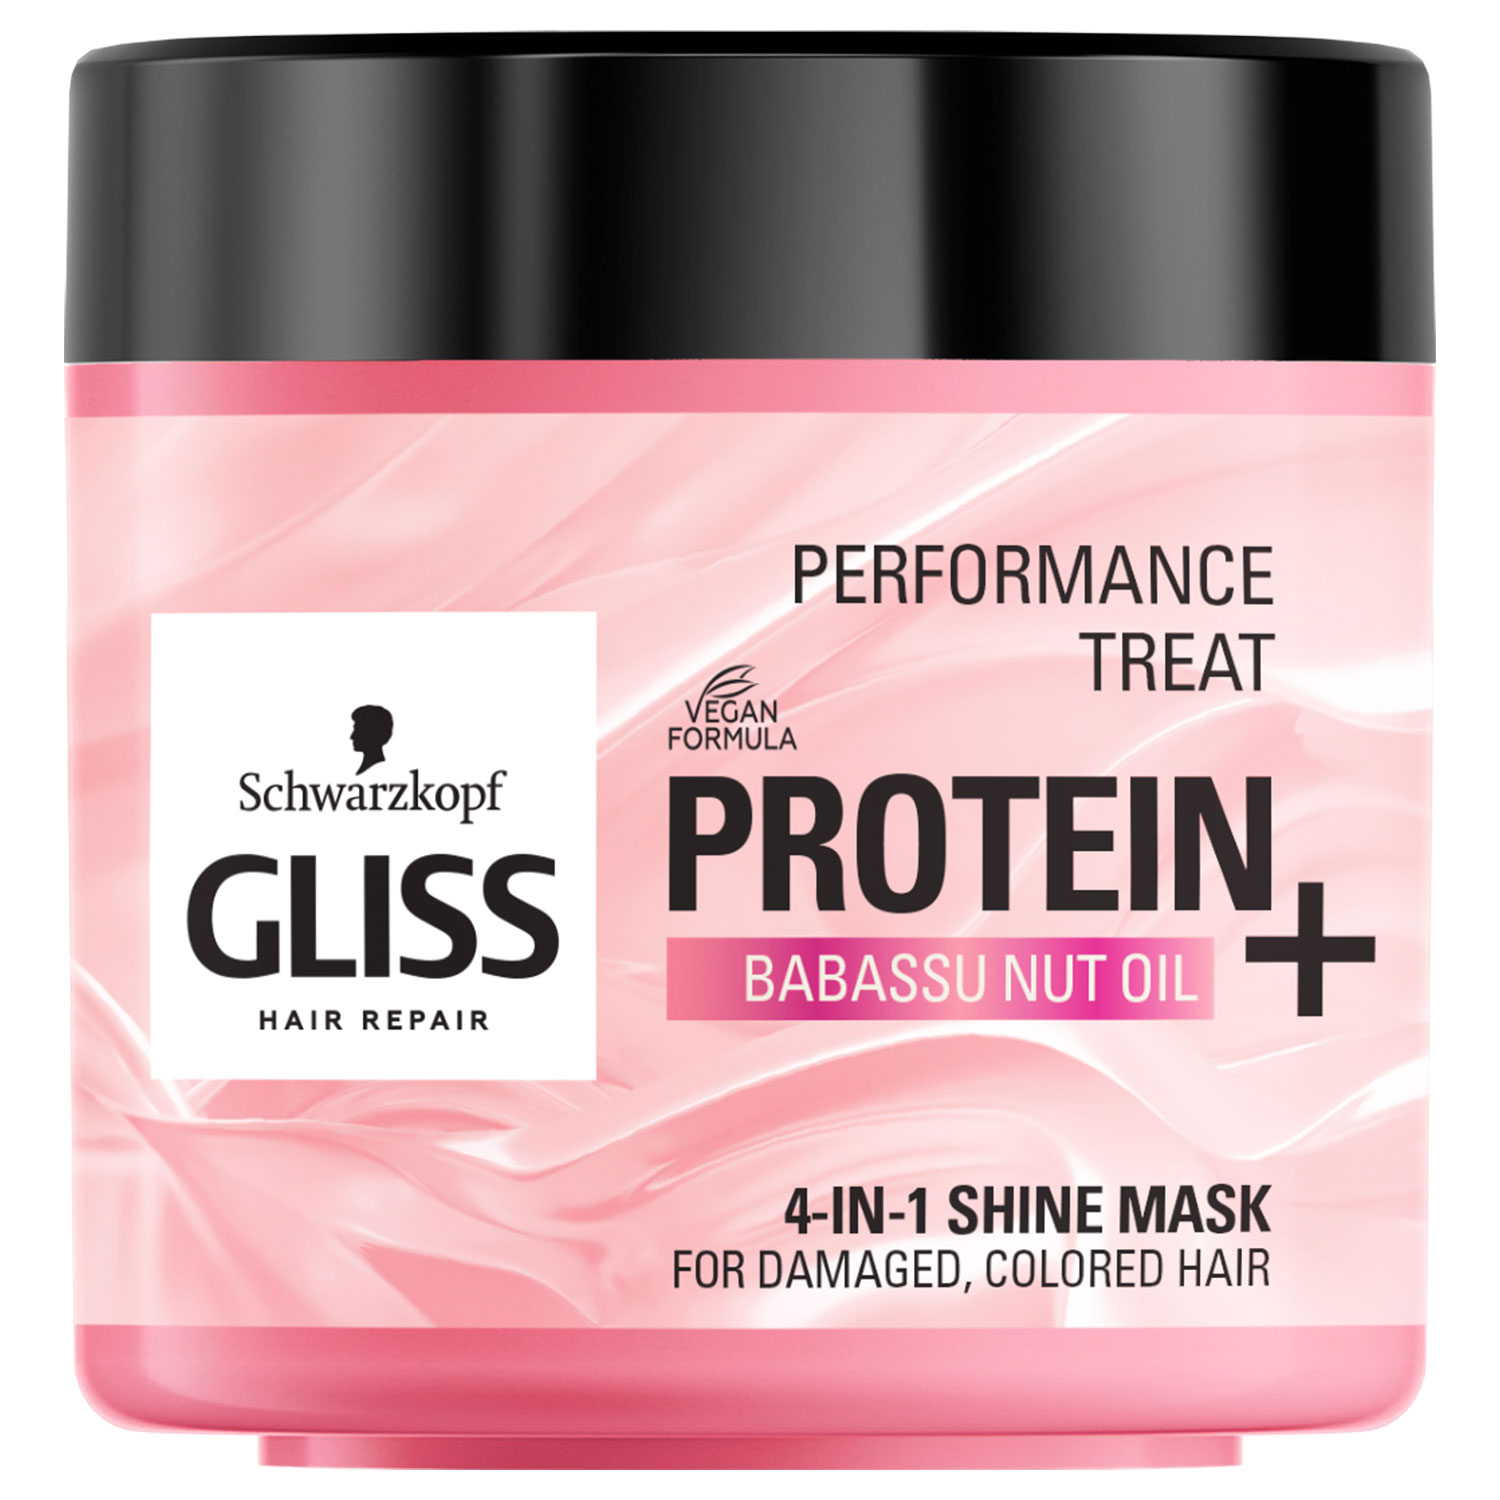 GLISS Performance Treat 4-in-1 Shine Mask 400 ml
vegan formula